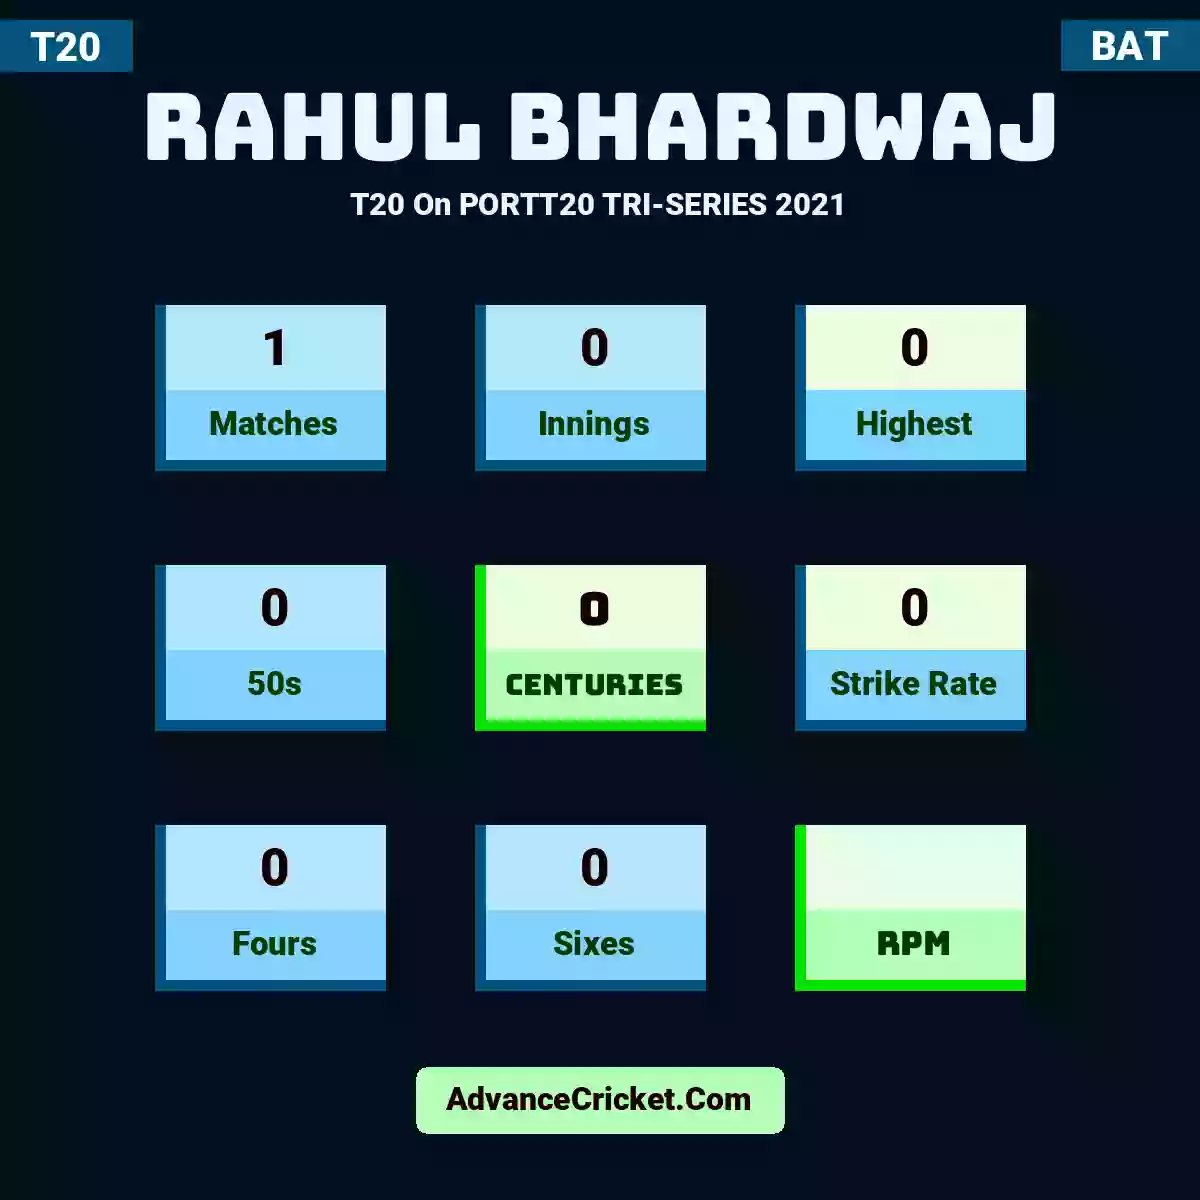 Rahul Bhardwaj T20  On PORTT20 TRI-SERIES 2021, Rahul Bhardwaj played 1 matches, scored 0 runs as highest, 0 half-centuries, and 0 centuries, with a strike rate of 0. R.Bhardwaj hit 0 fours and 0 sixes.